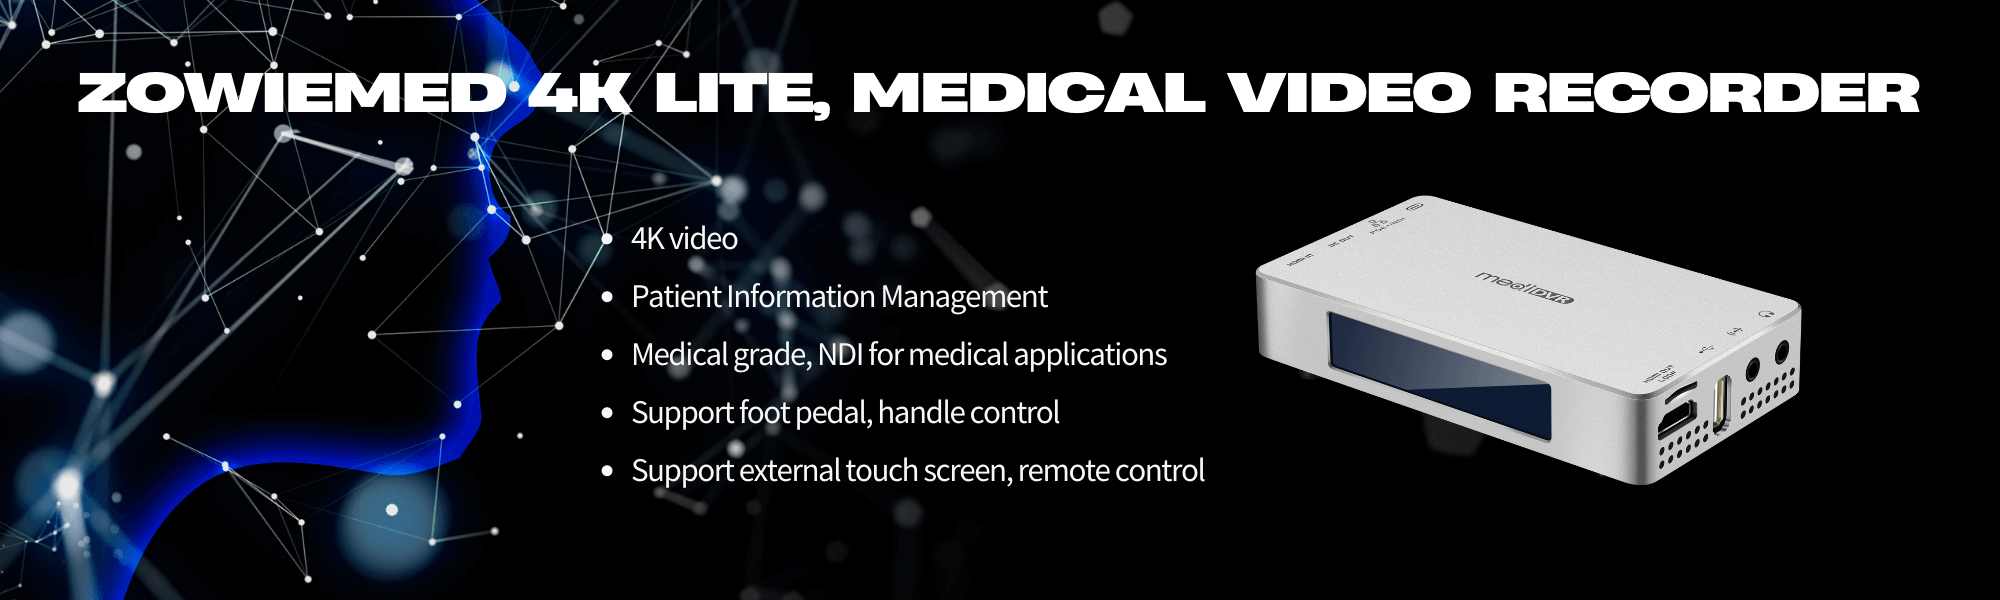 ZowieMed-4K-Lite-Medical-Video-Recorder